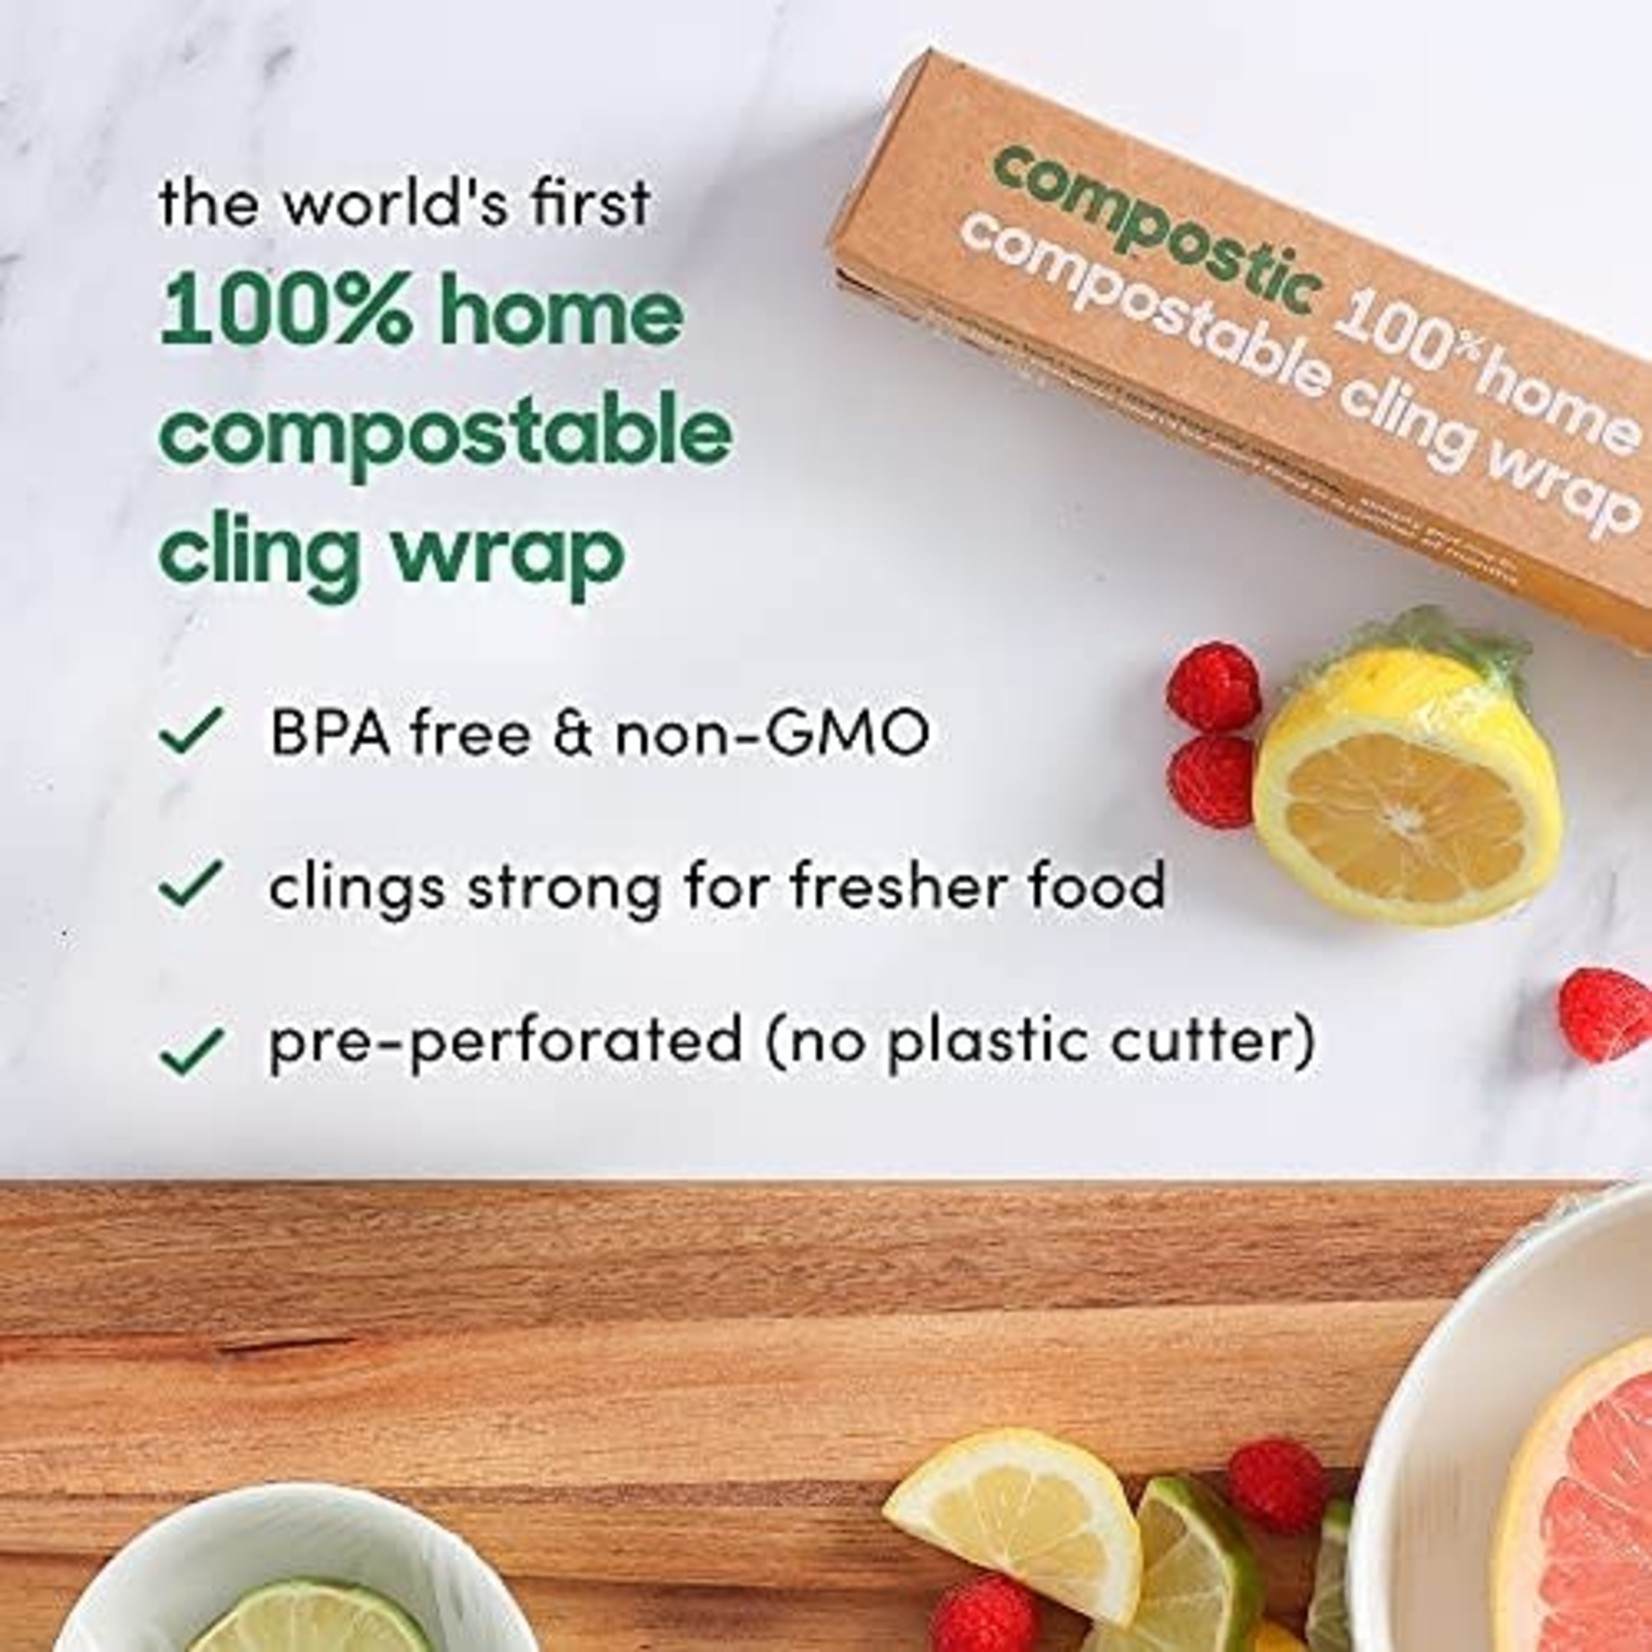 Compostic Compostic 100% Compostable Cling Wrap 30m